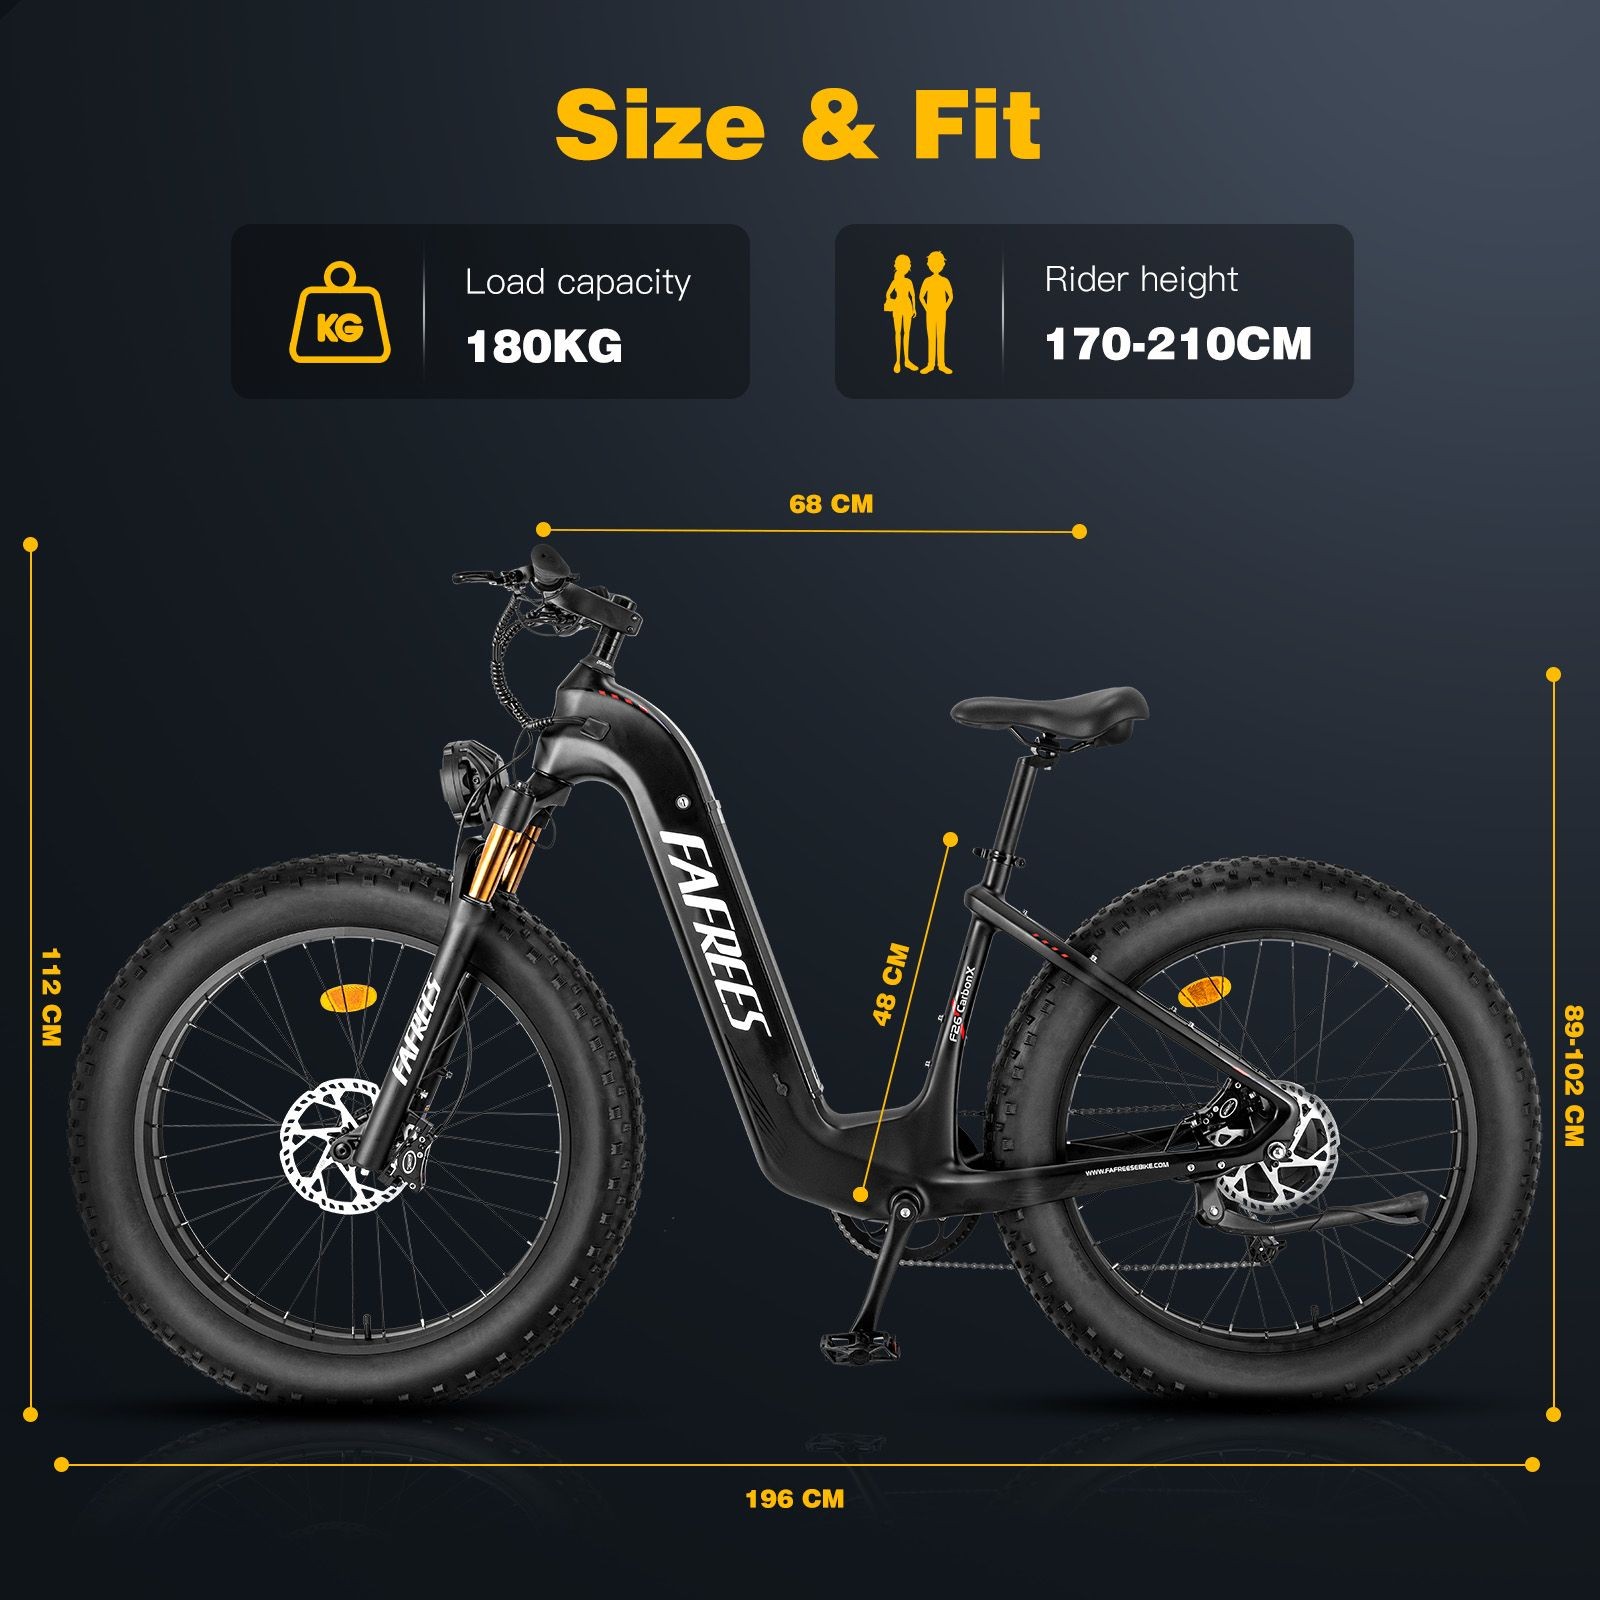 Bicicleta eléctrica de 26*4,8 pulgadas FAFreees F26 Carbon